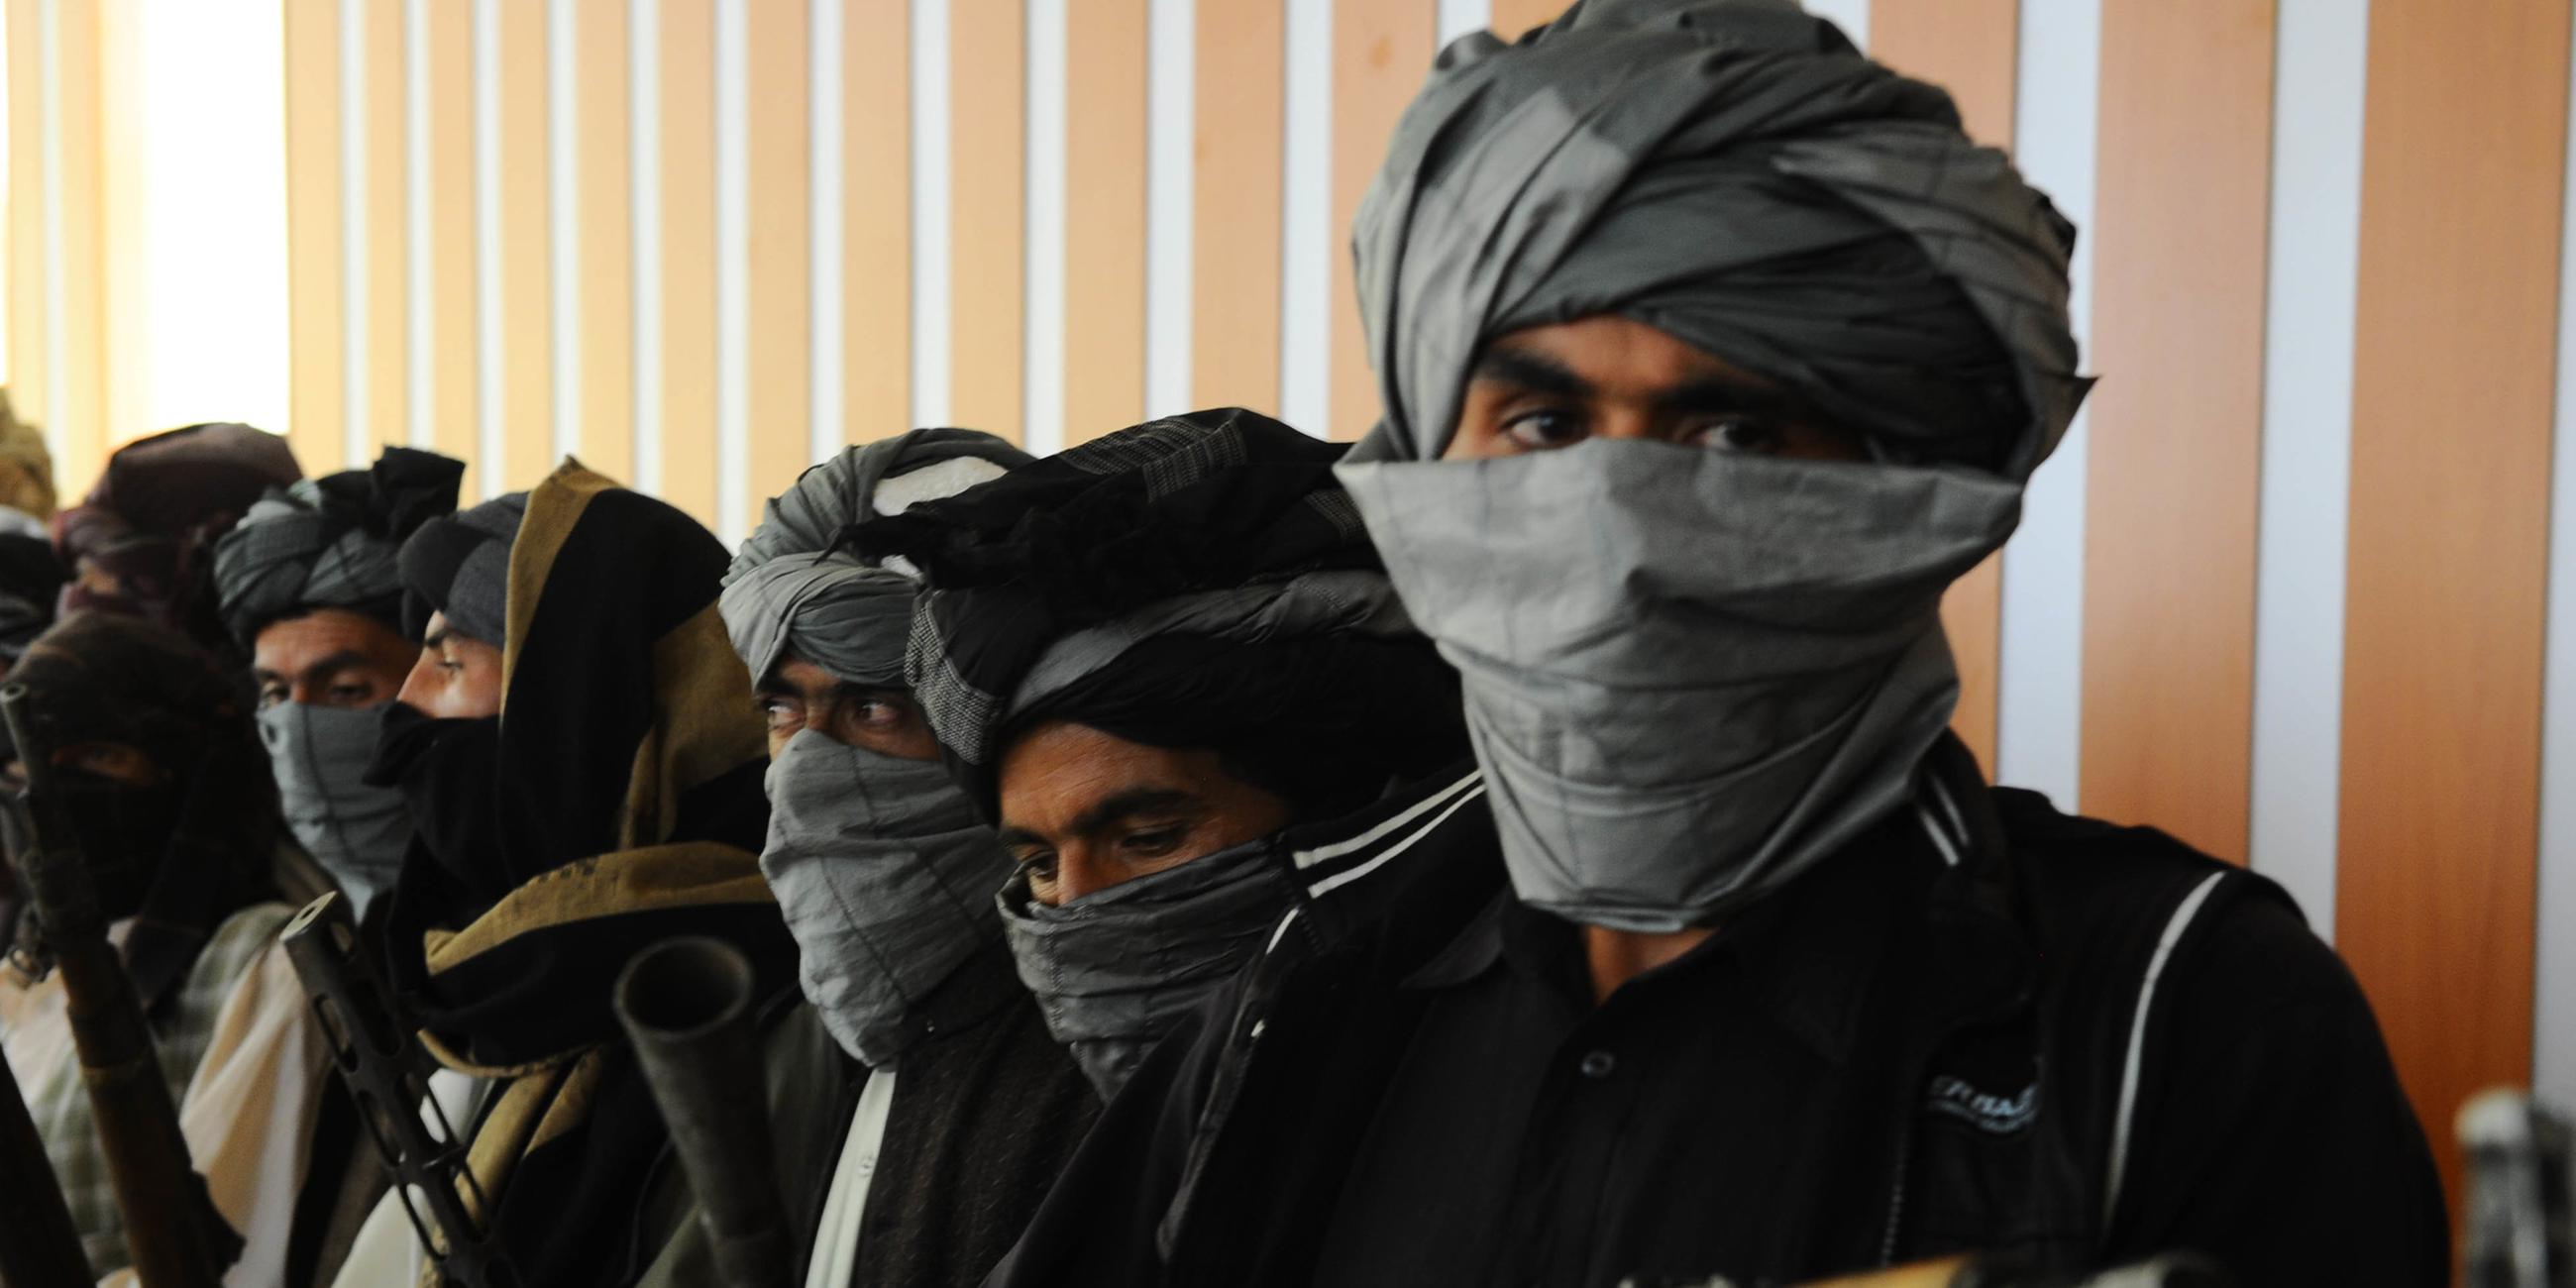 Archiv: Taliban-Kämpfer am 08.08.2013 in Afghanistan